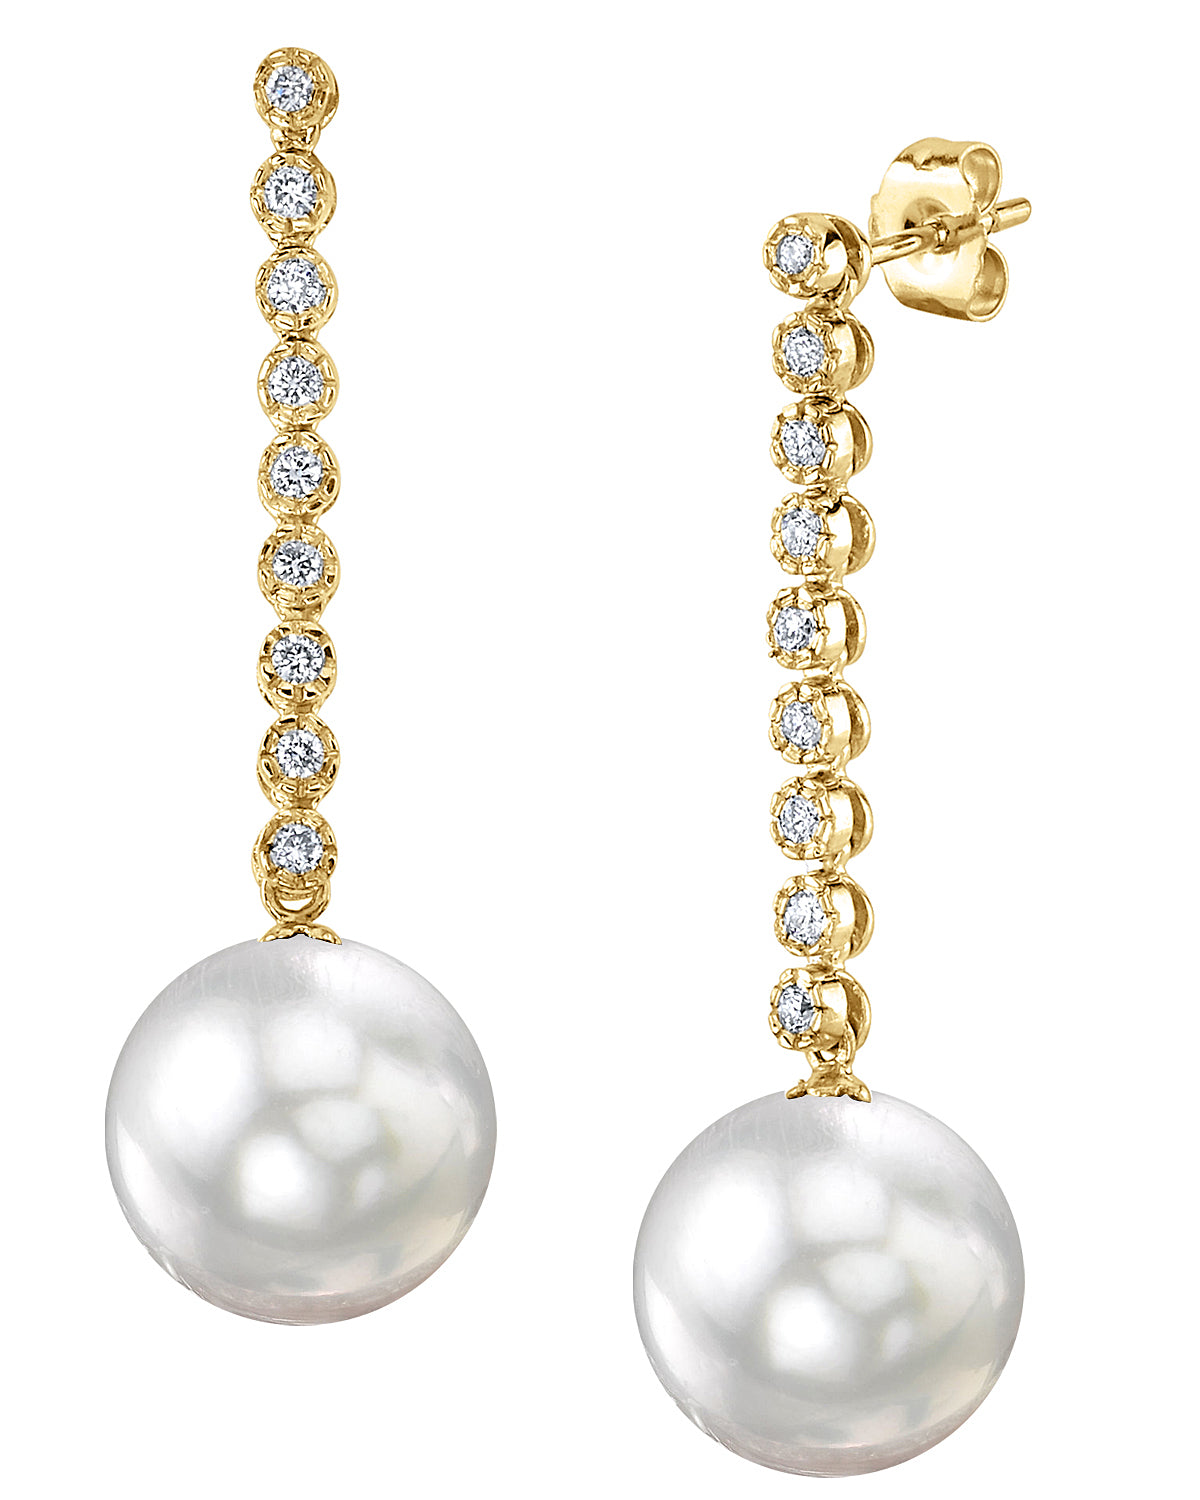 White South Sea Pearl & Diamond Serena Earrings - Third Image